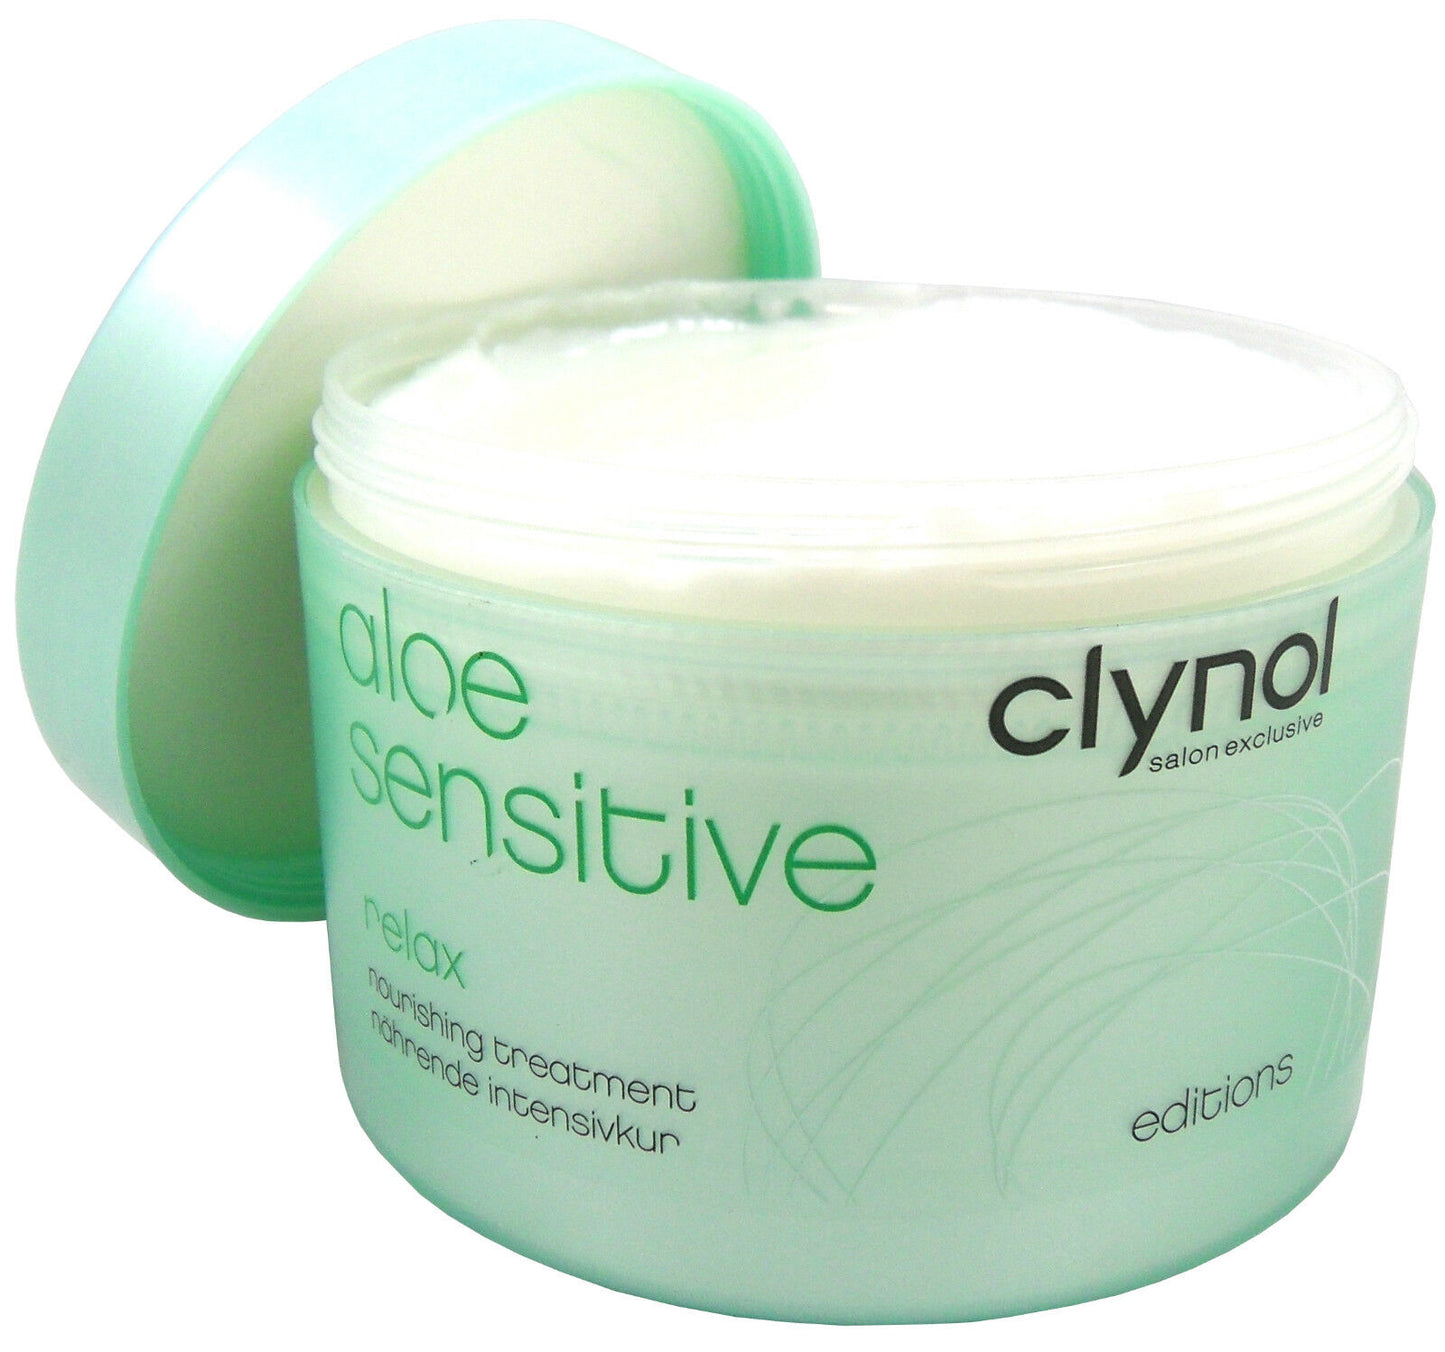 Clynol Aloe Sensitive 150ml - Relax Nourishing Treatment ( Salon Exclusive )